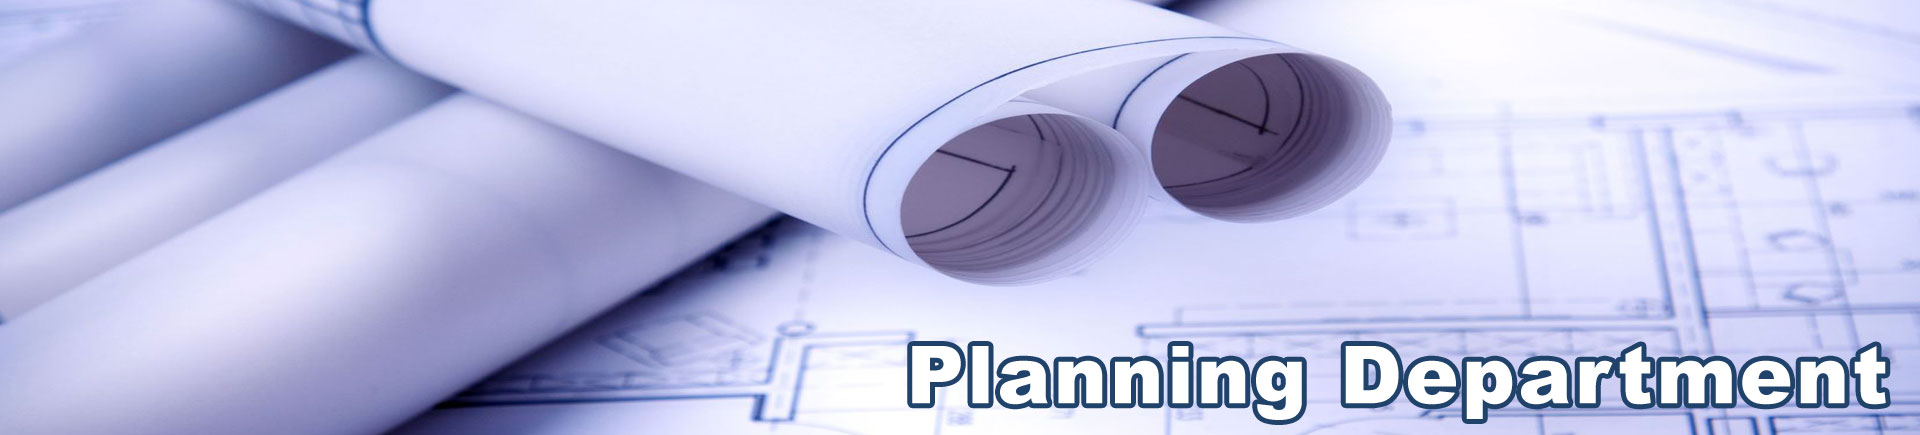 planning department planning forms header